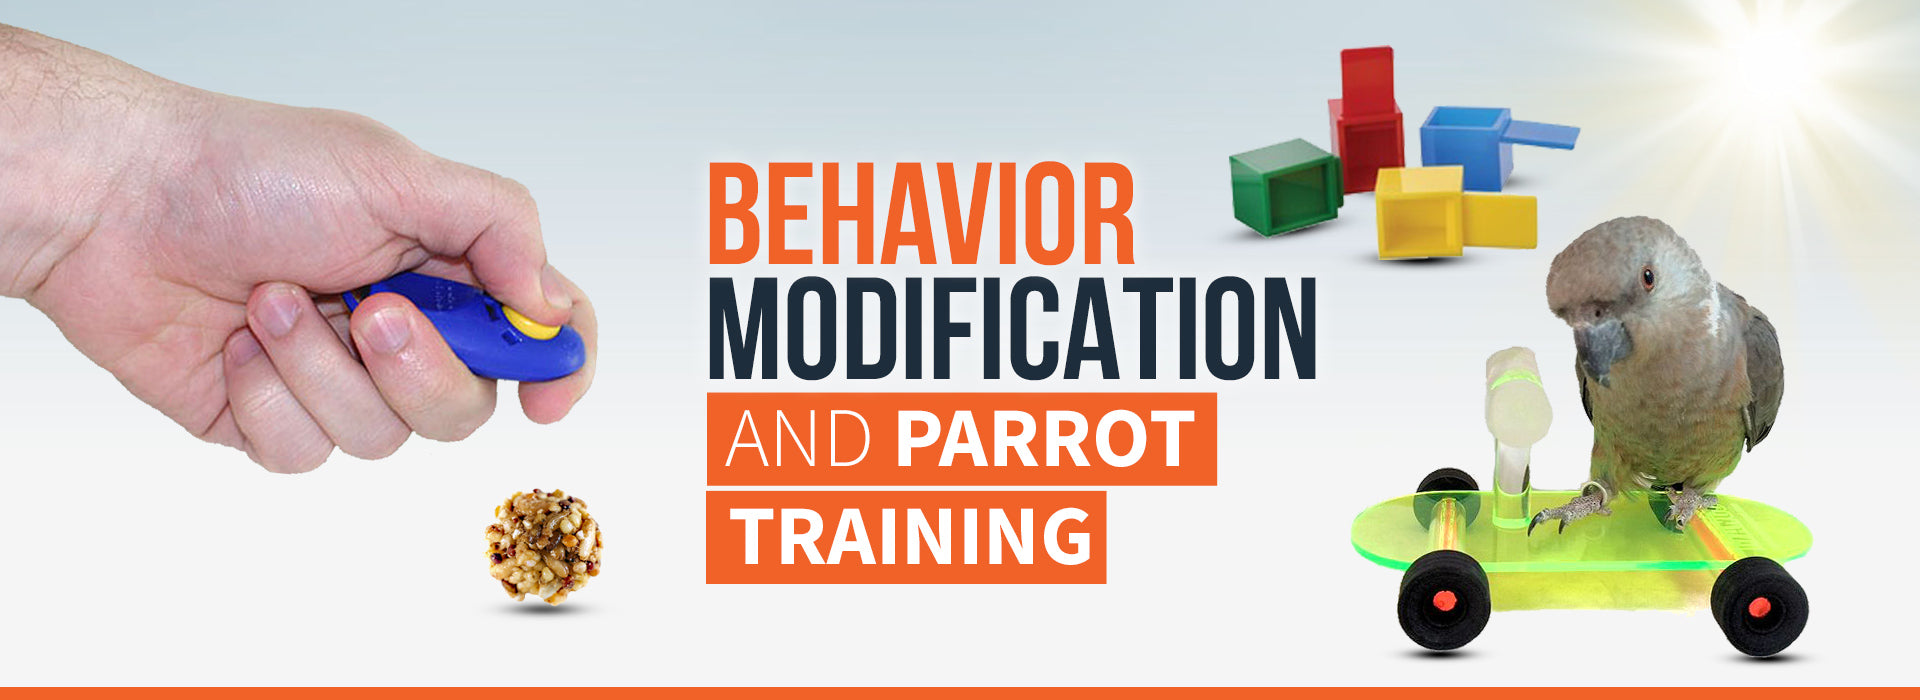 Parrot Training Supplies